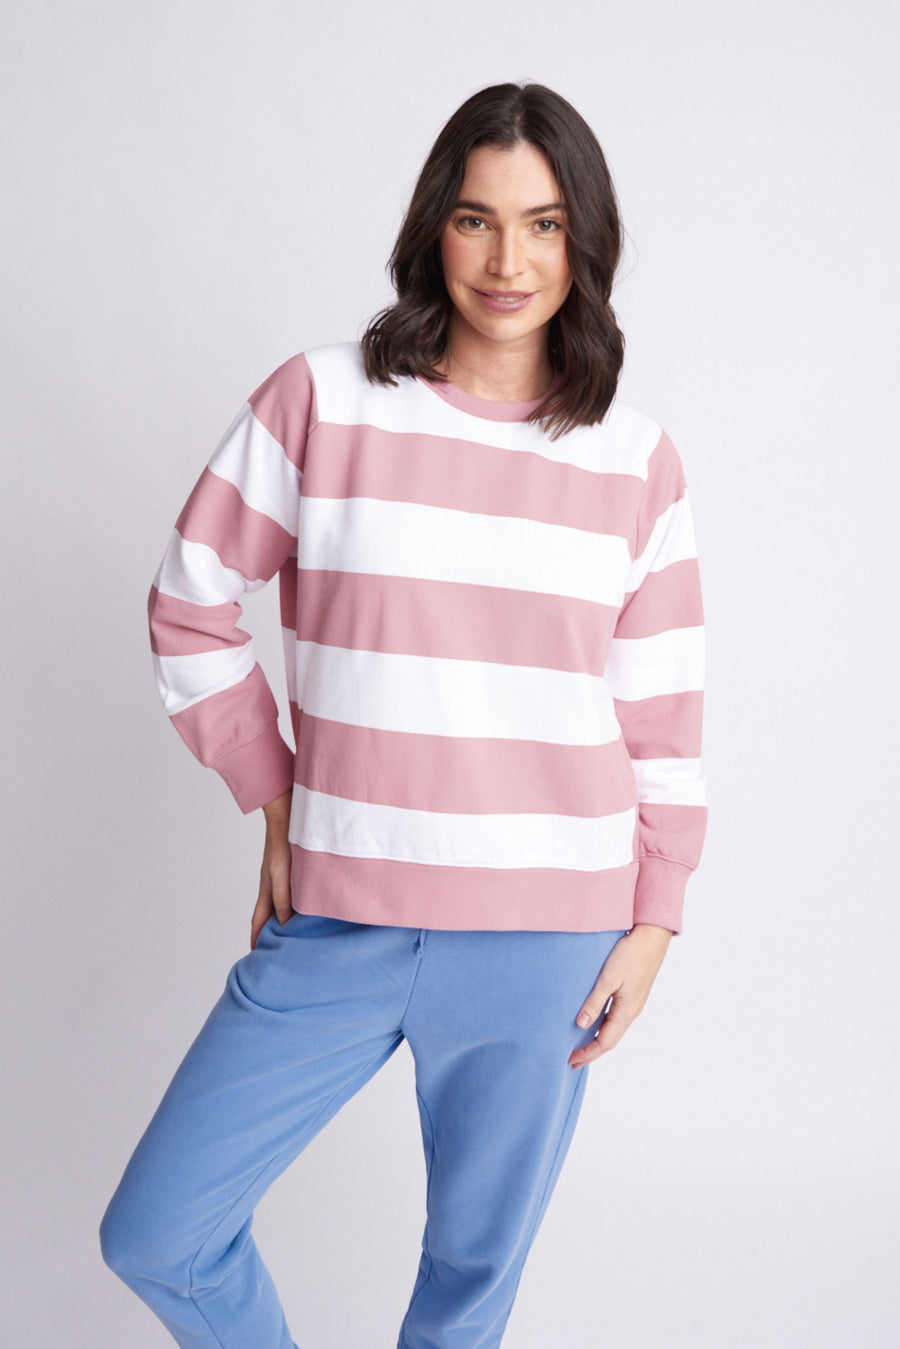 Cloth + Paper + Scissors - Fleece Stripe Side Split Sweater - Blush/White